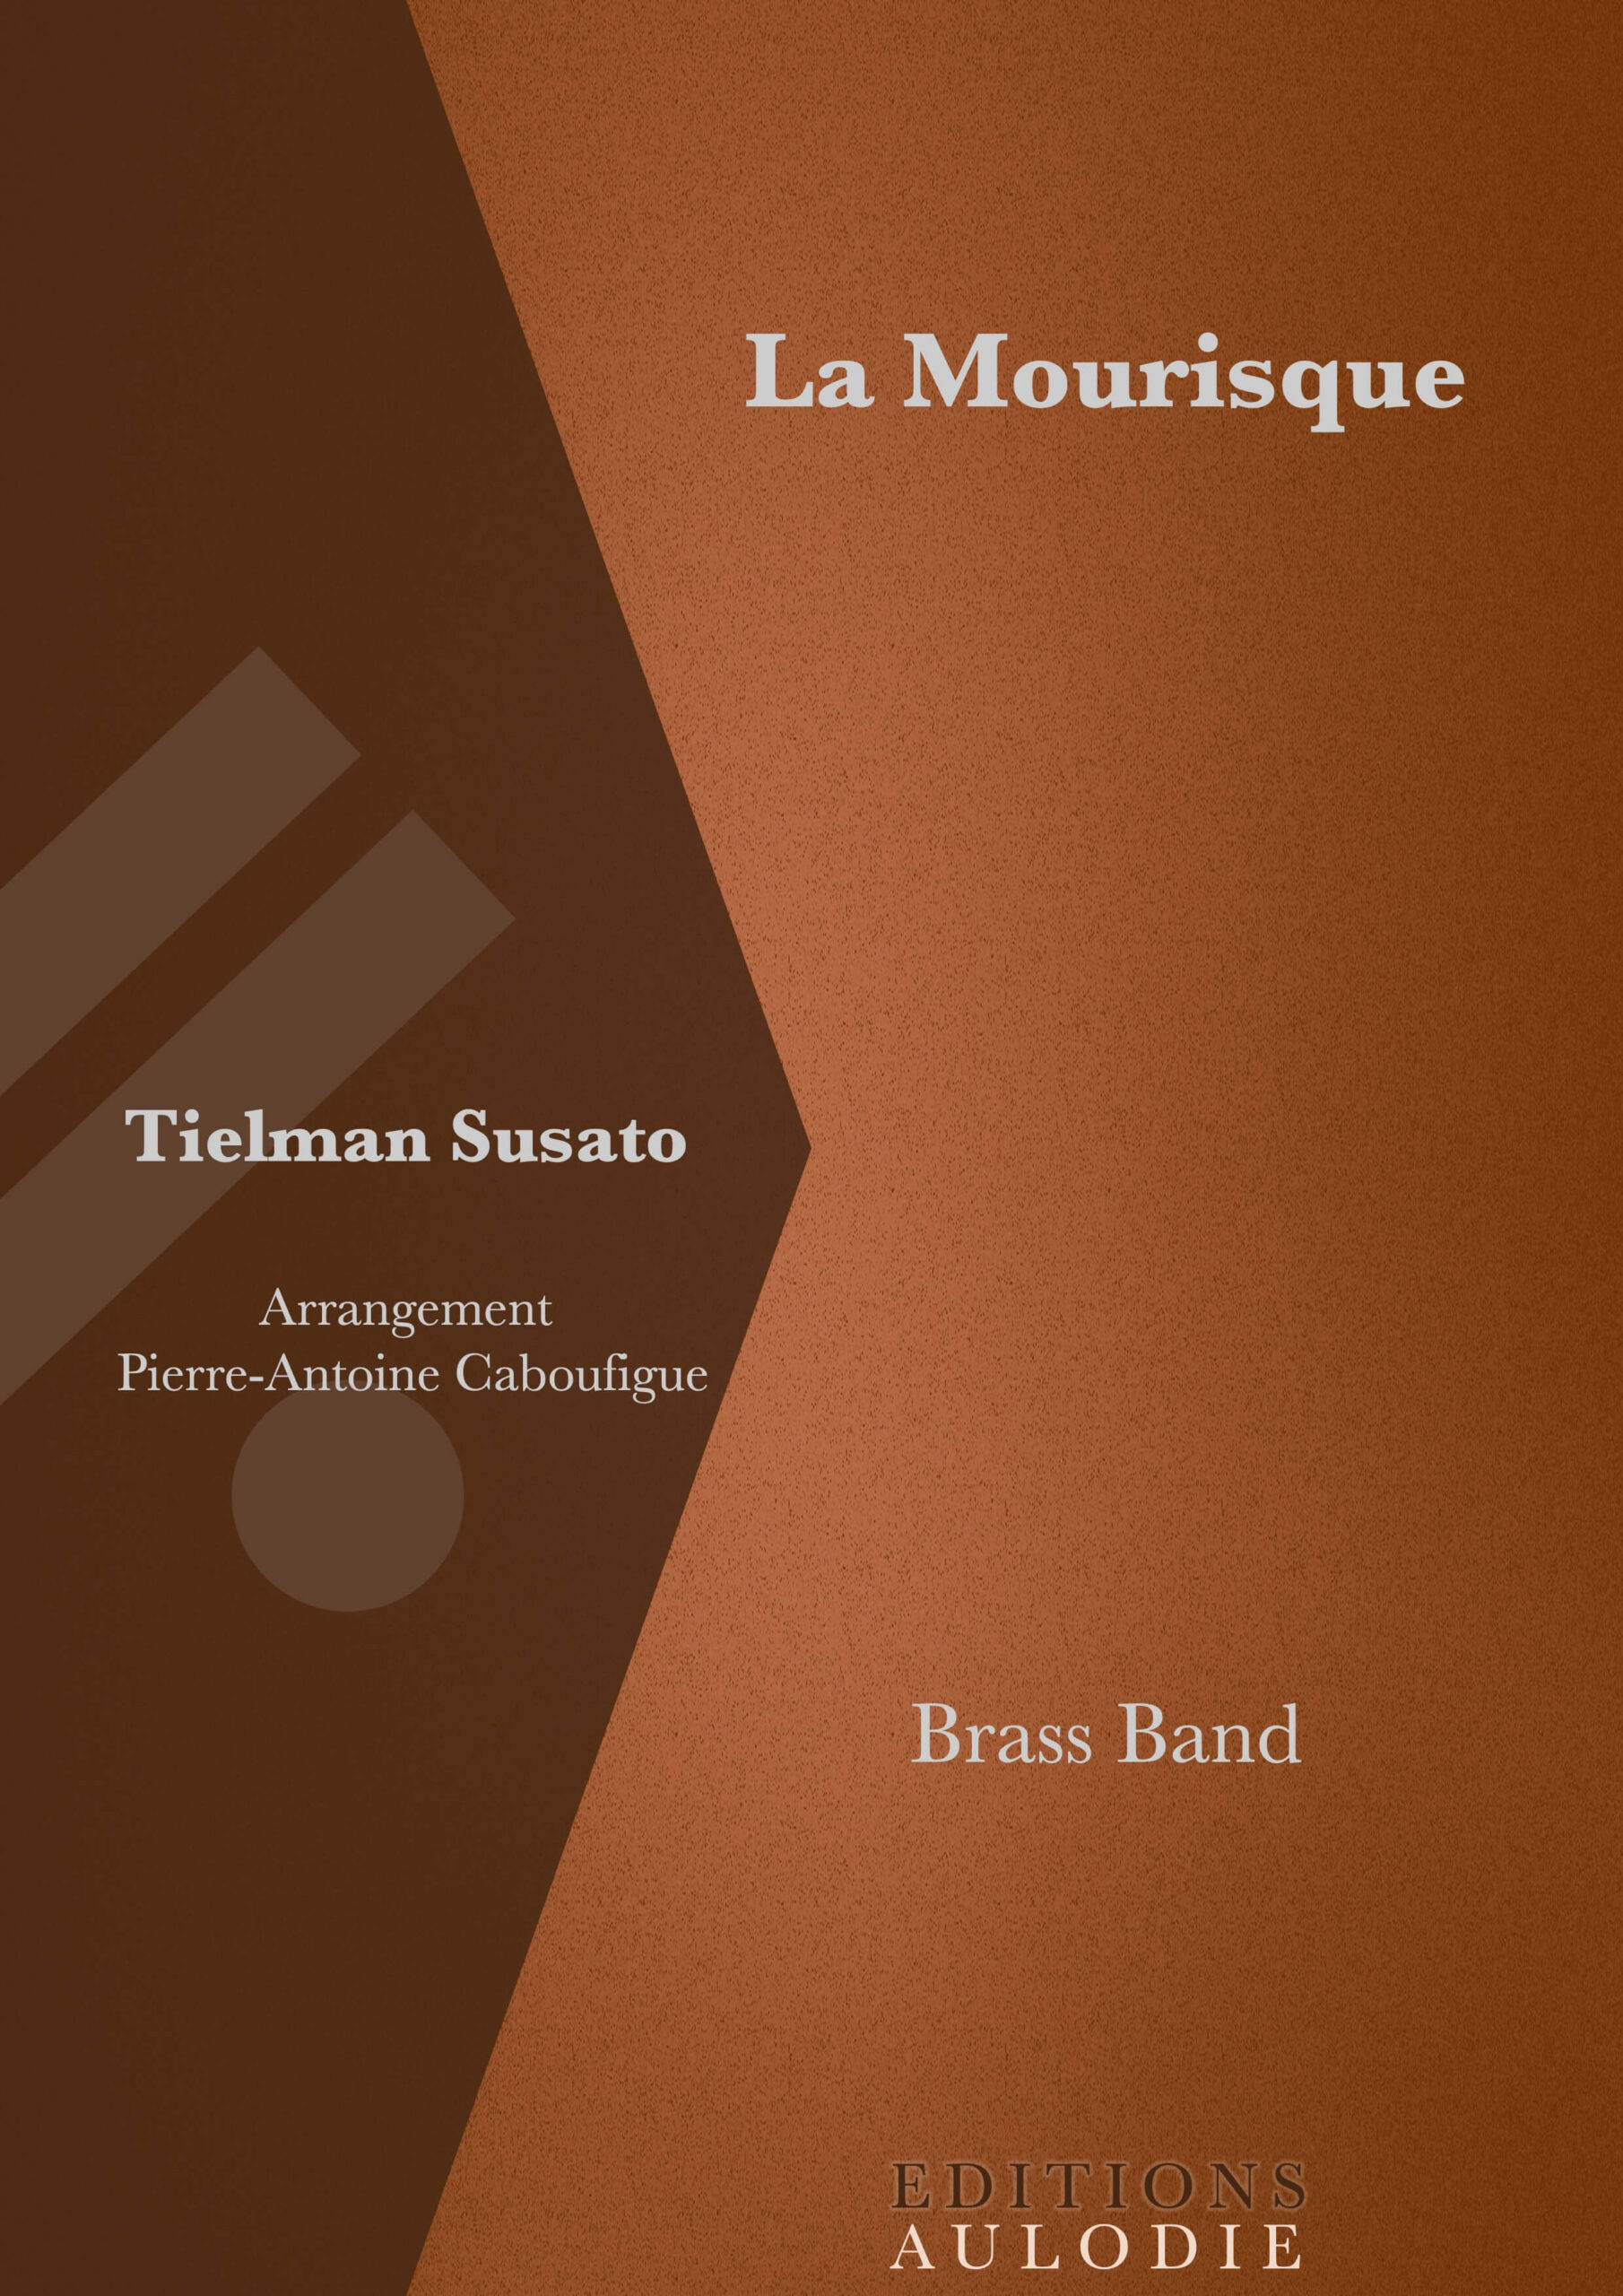 EA01034-La_Mourisque-Tielman_Susato-Brass_Band